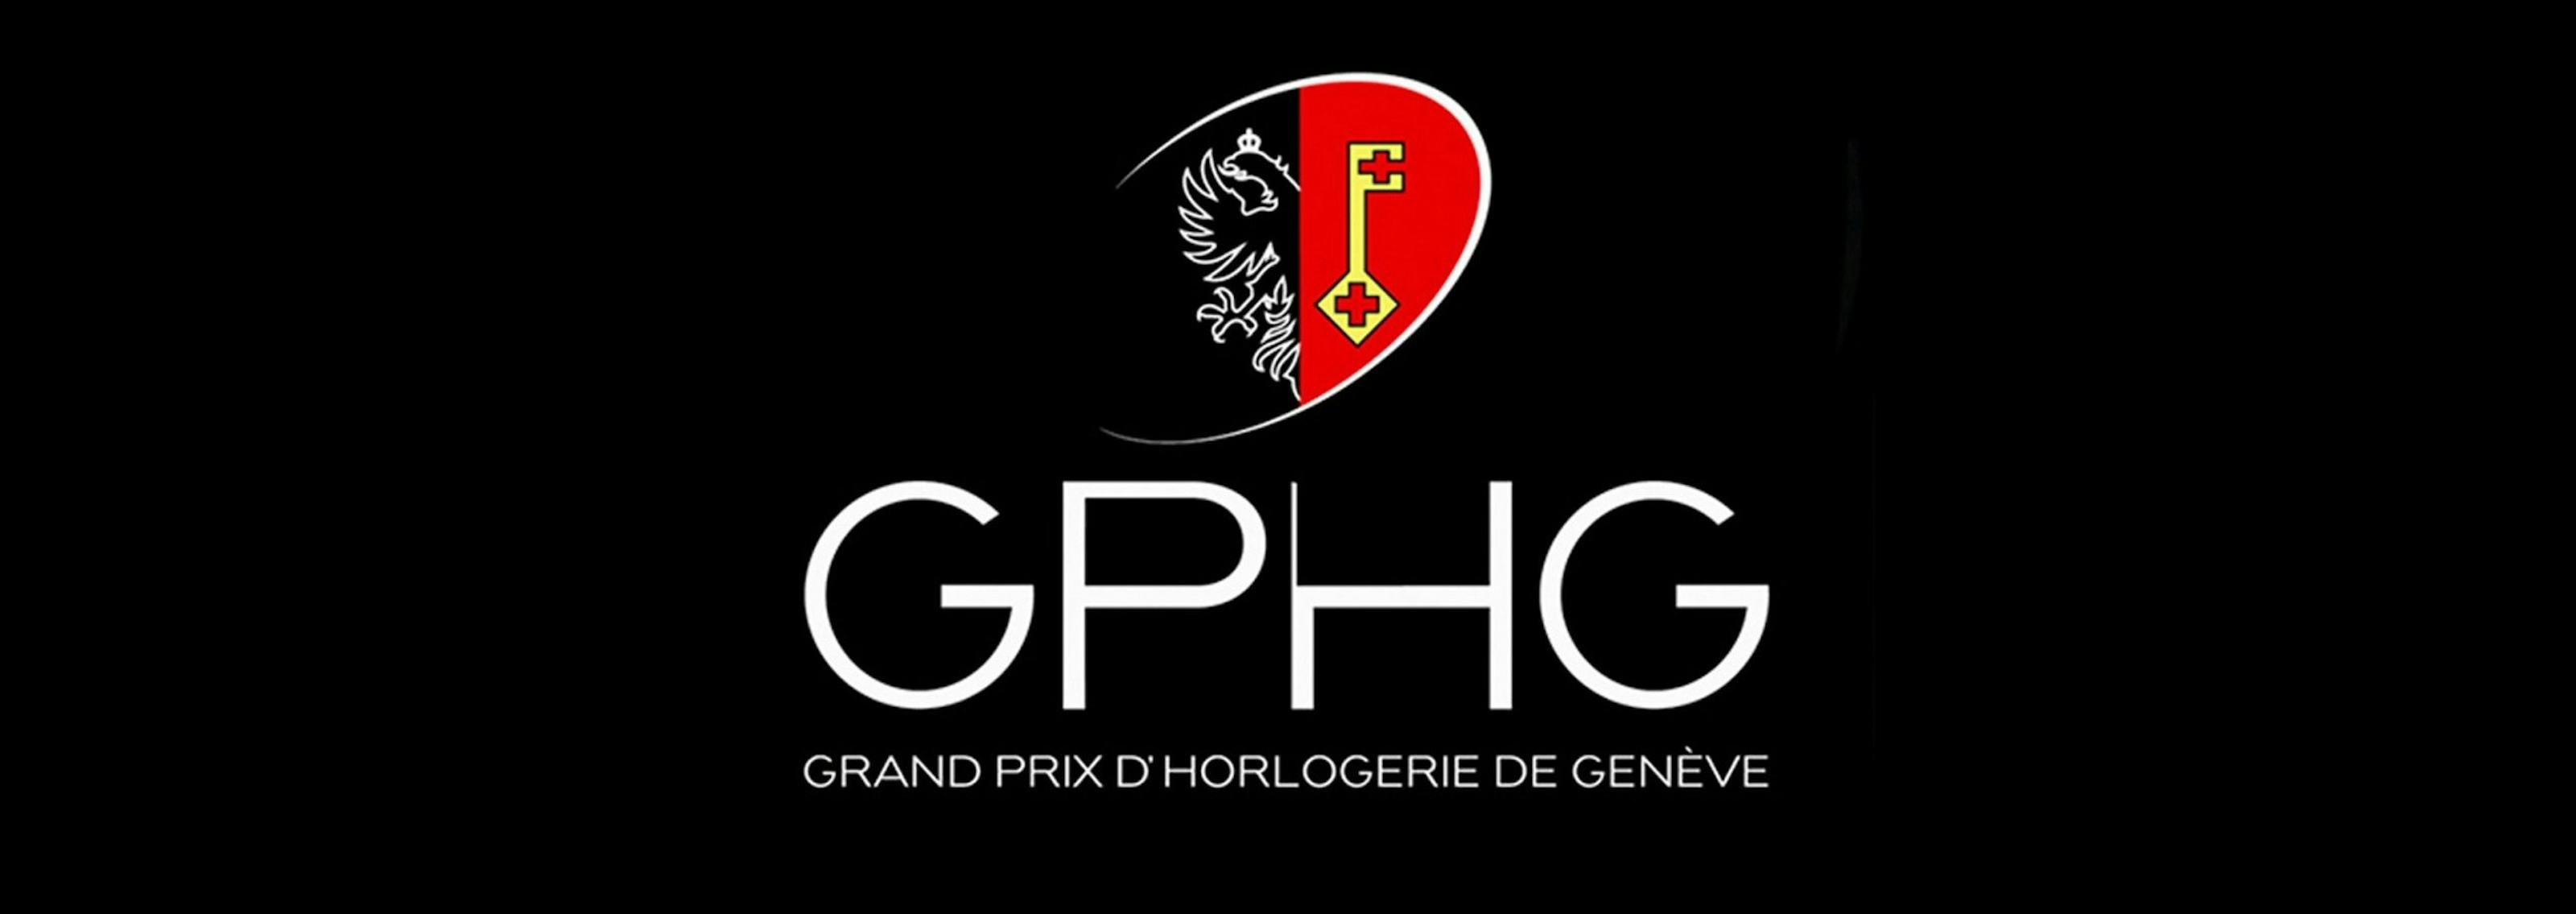 Stream the GPHG 2022 Award Ceremony November 10th<br> At 6:30 pm CET/ 12:30 EST